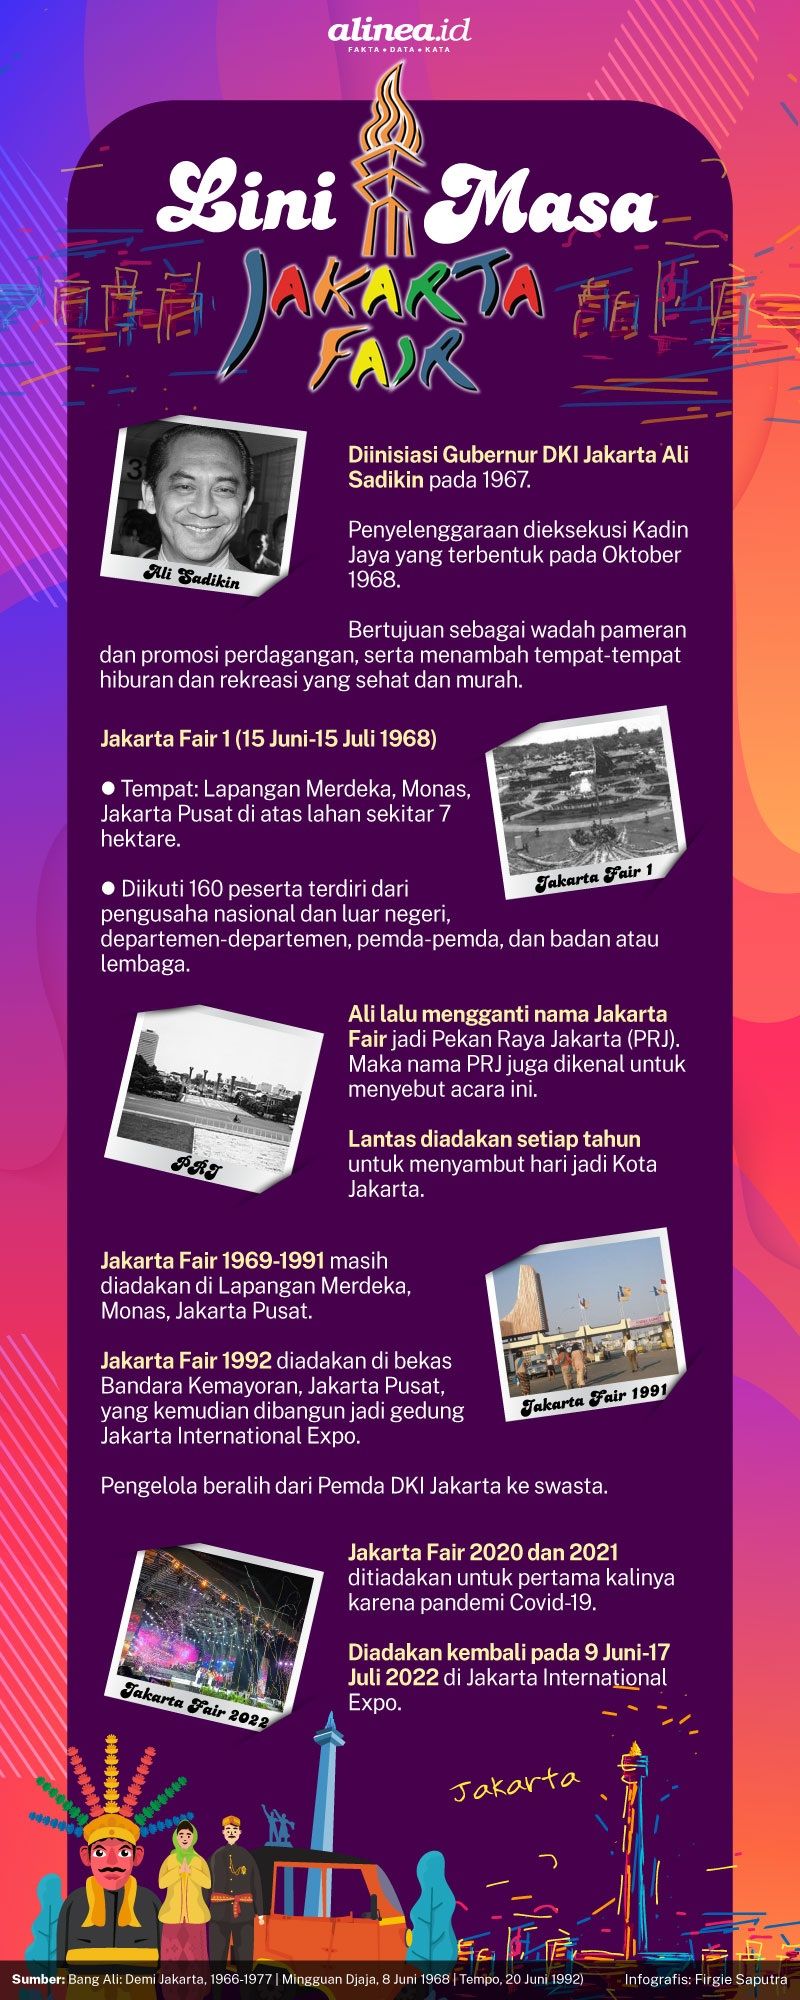 Infografik Jakarta Fair. Alinea.id/Firgie Saputra